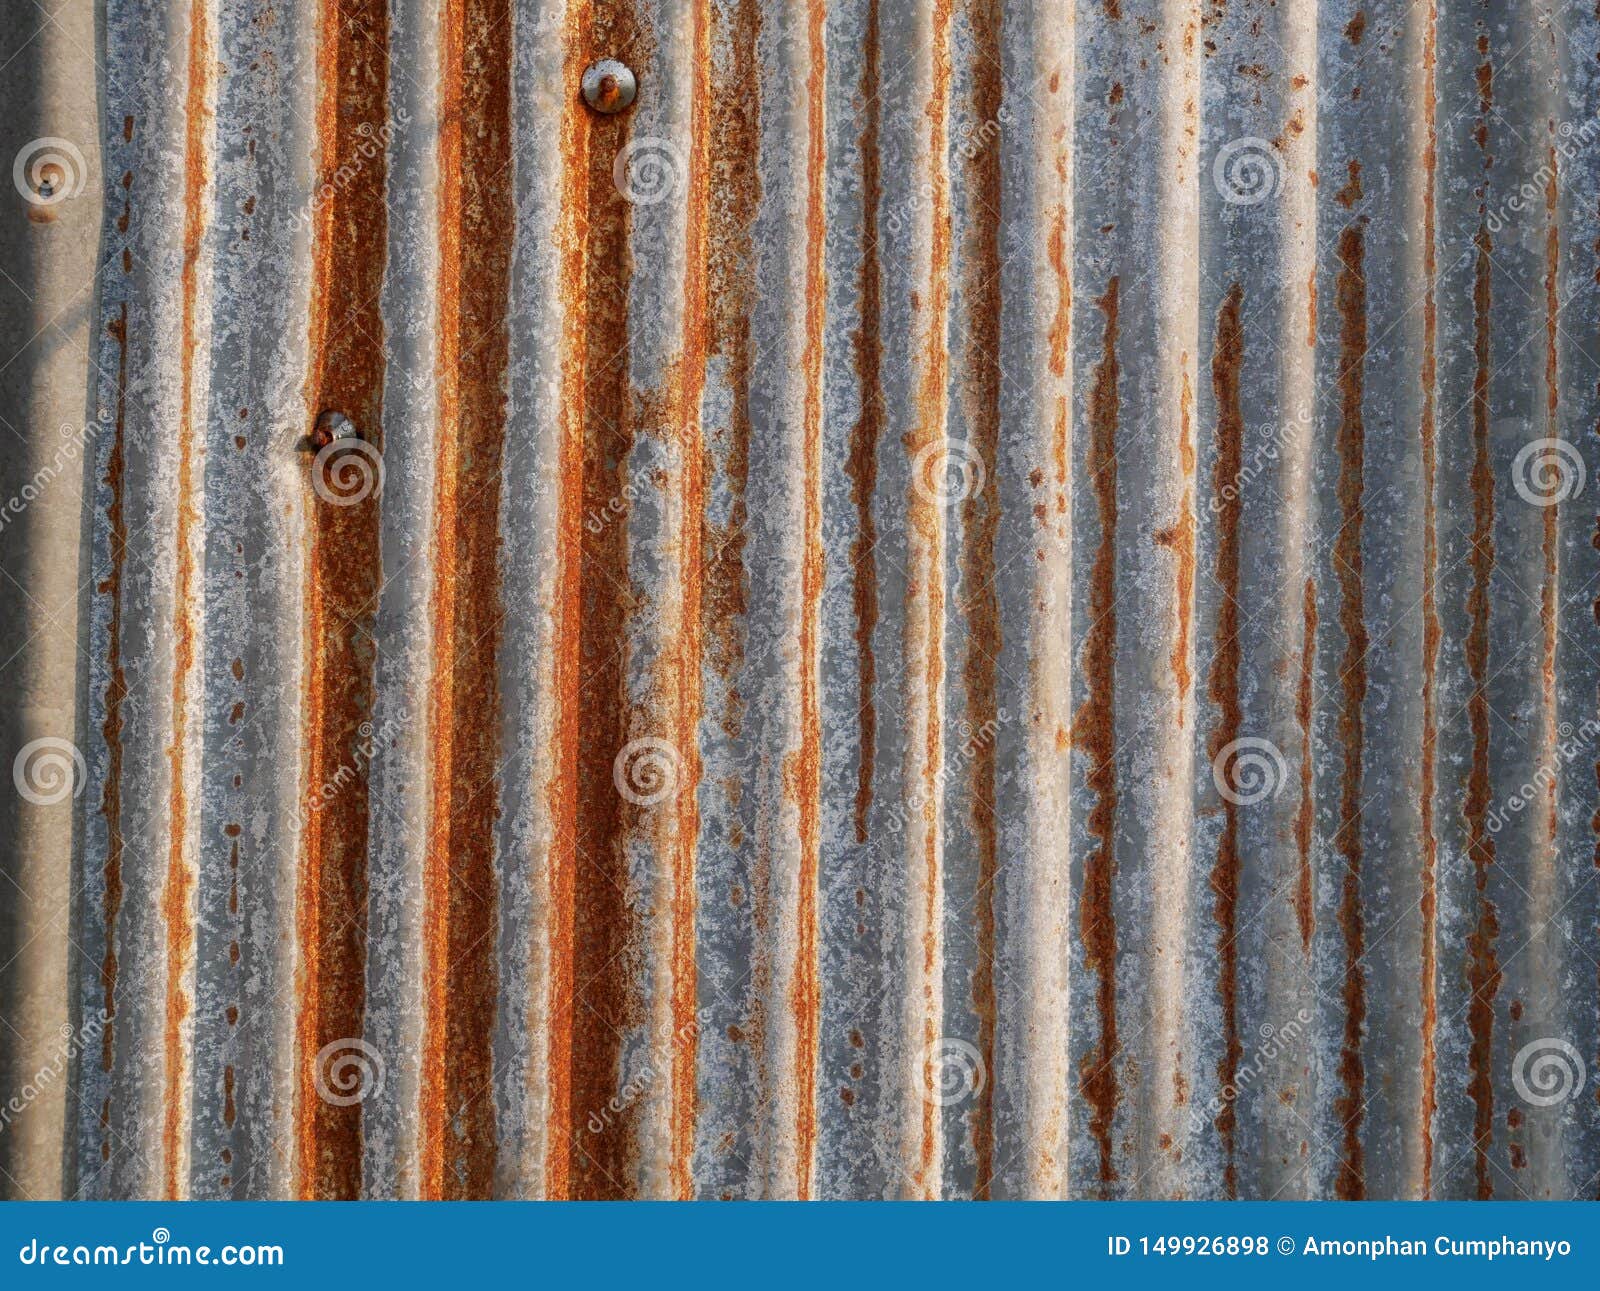 Can sheet metal rust фото 22